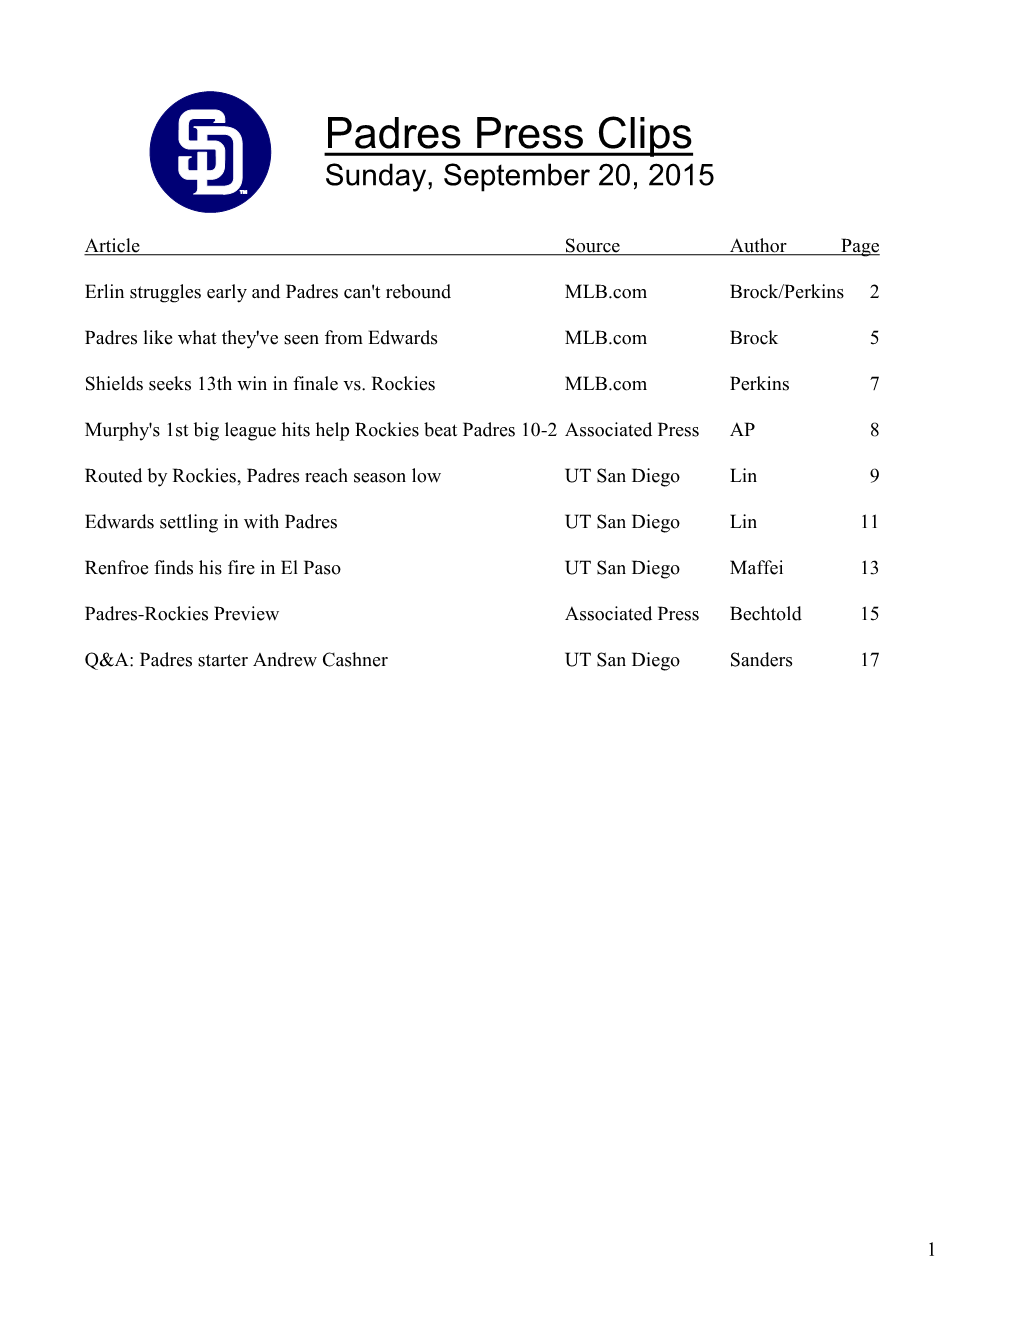 Padres Press Clips Sunday, September 20, 2015